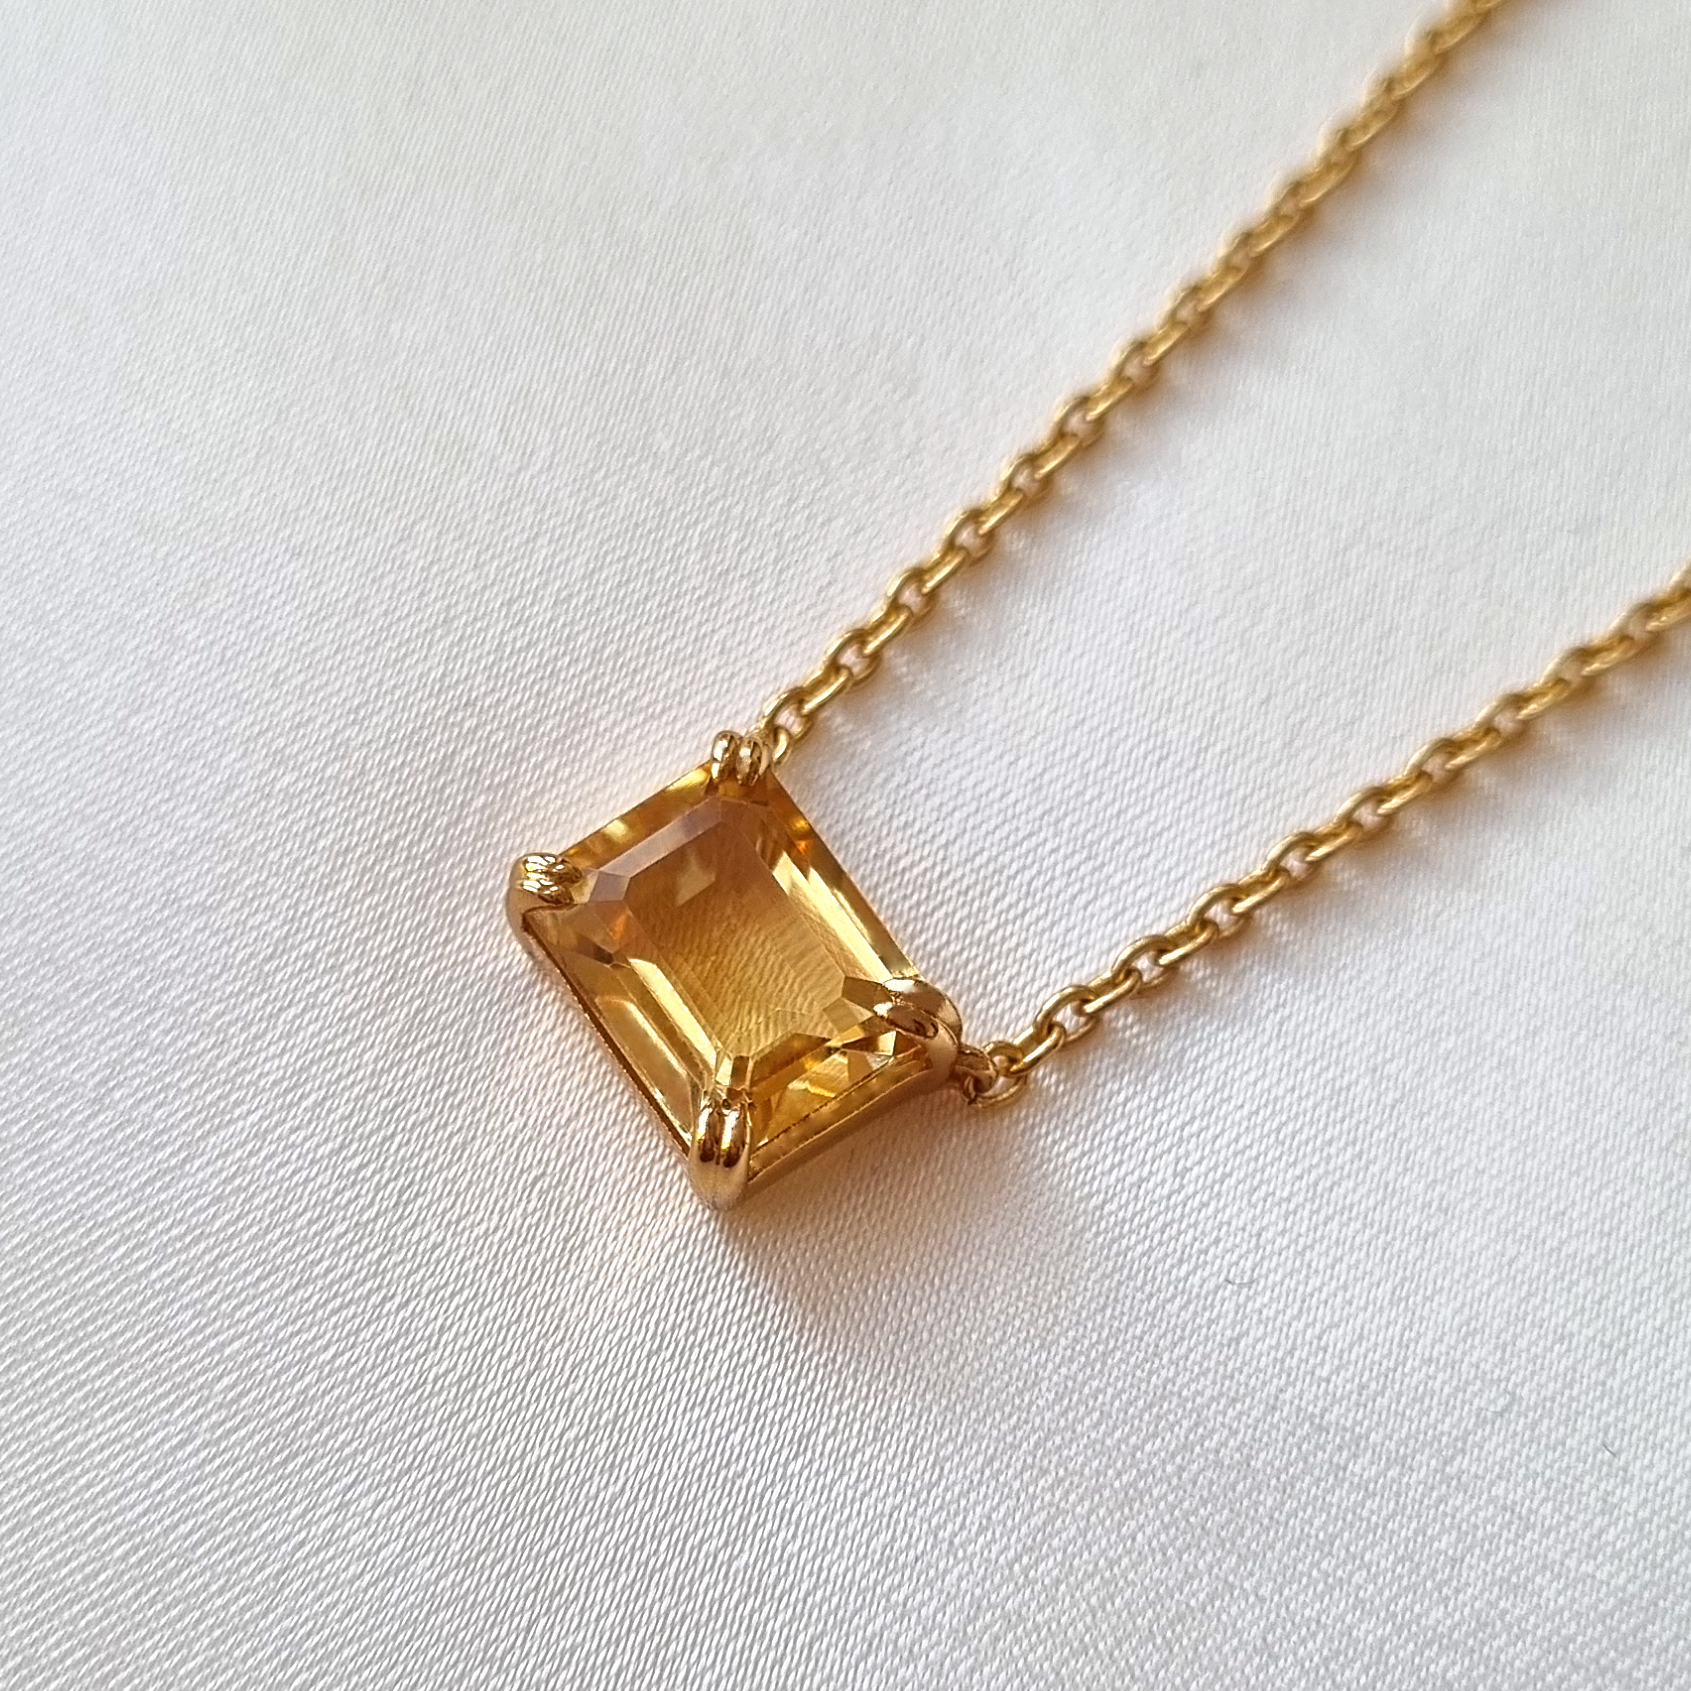 Layla Citrine Necklace in 18k Gold Vermeil